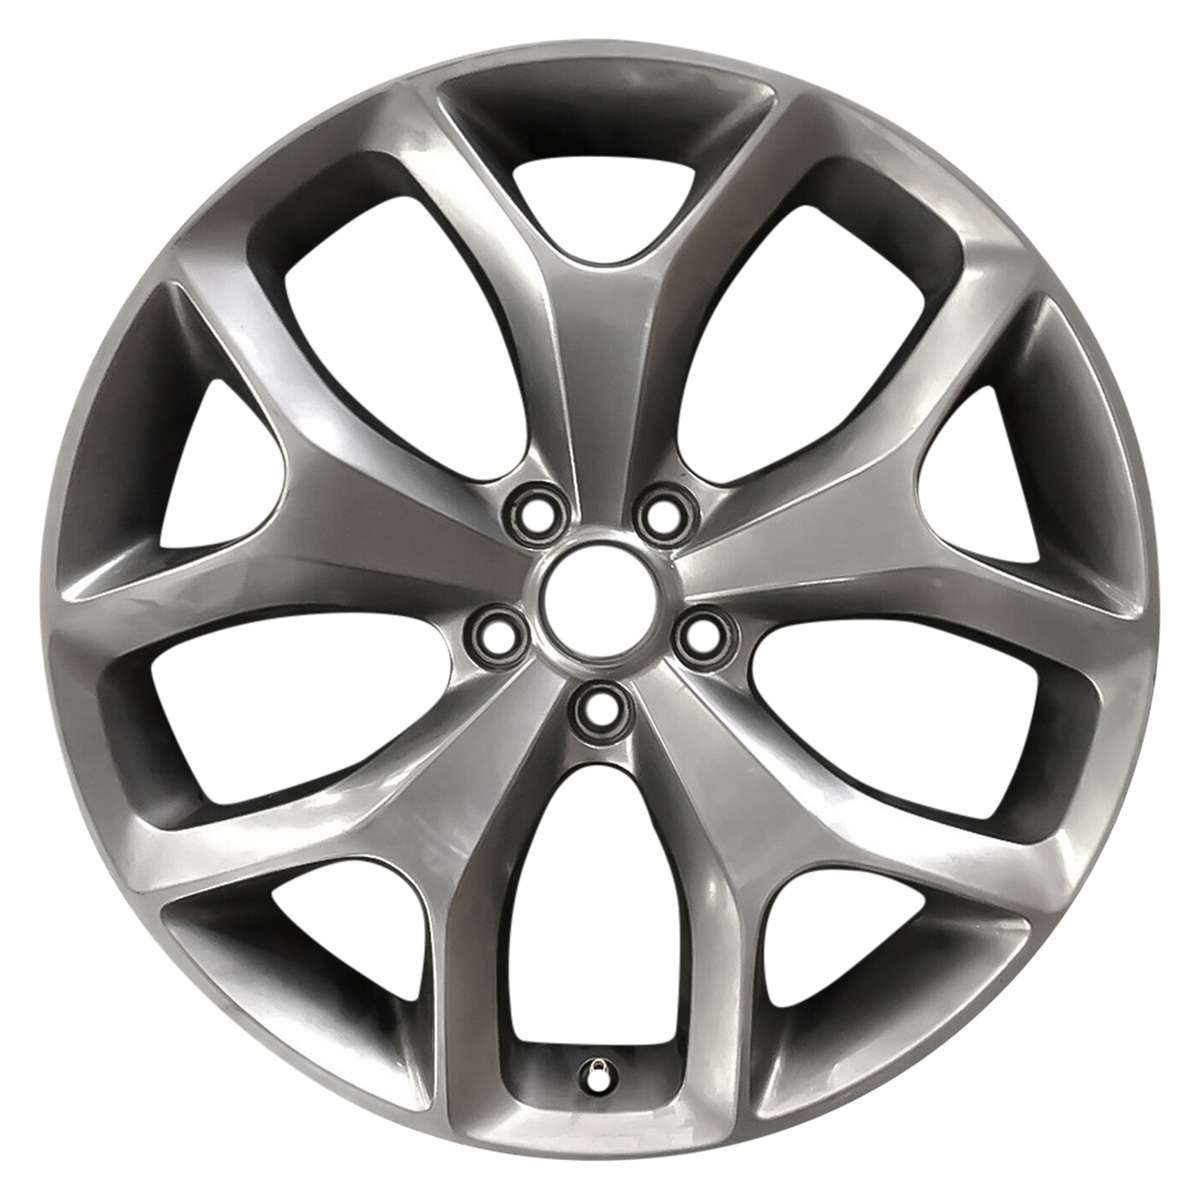 2016 Dodge Charger 20" OEM Wheel Rim W2523LH